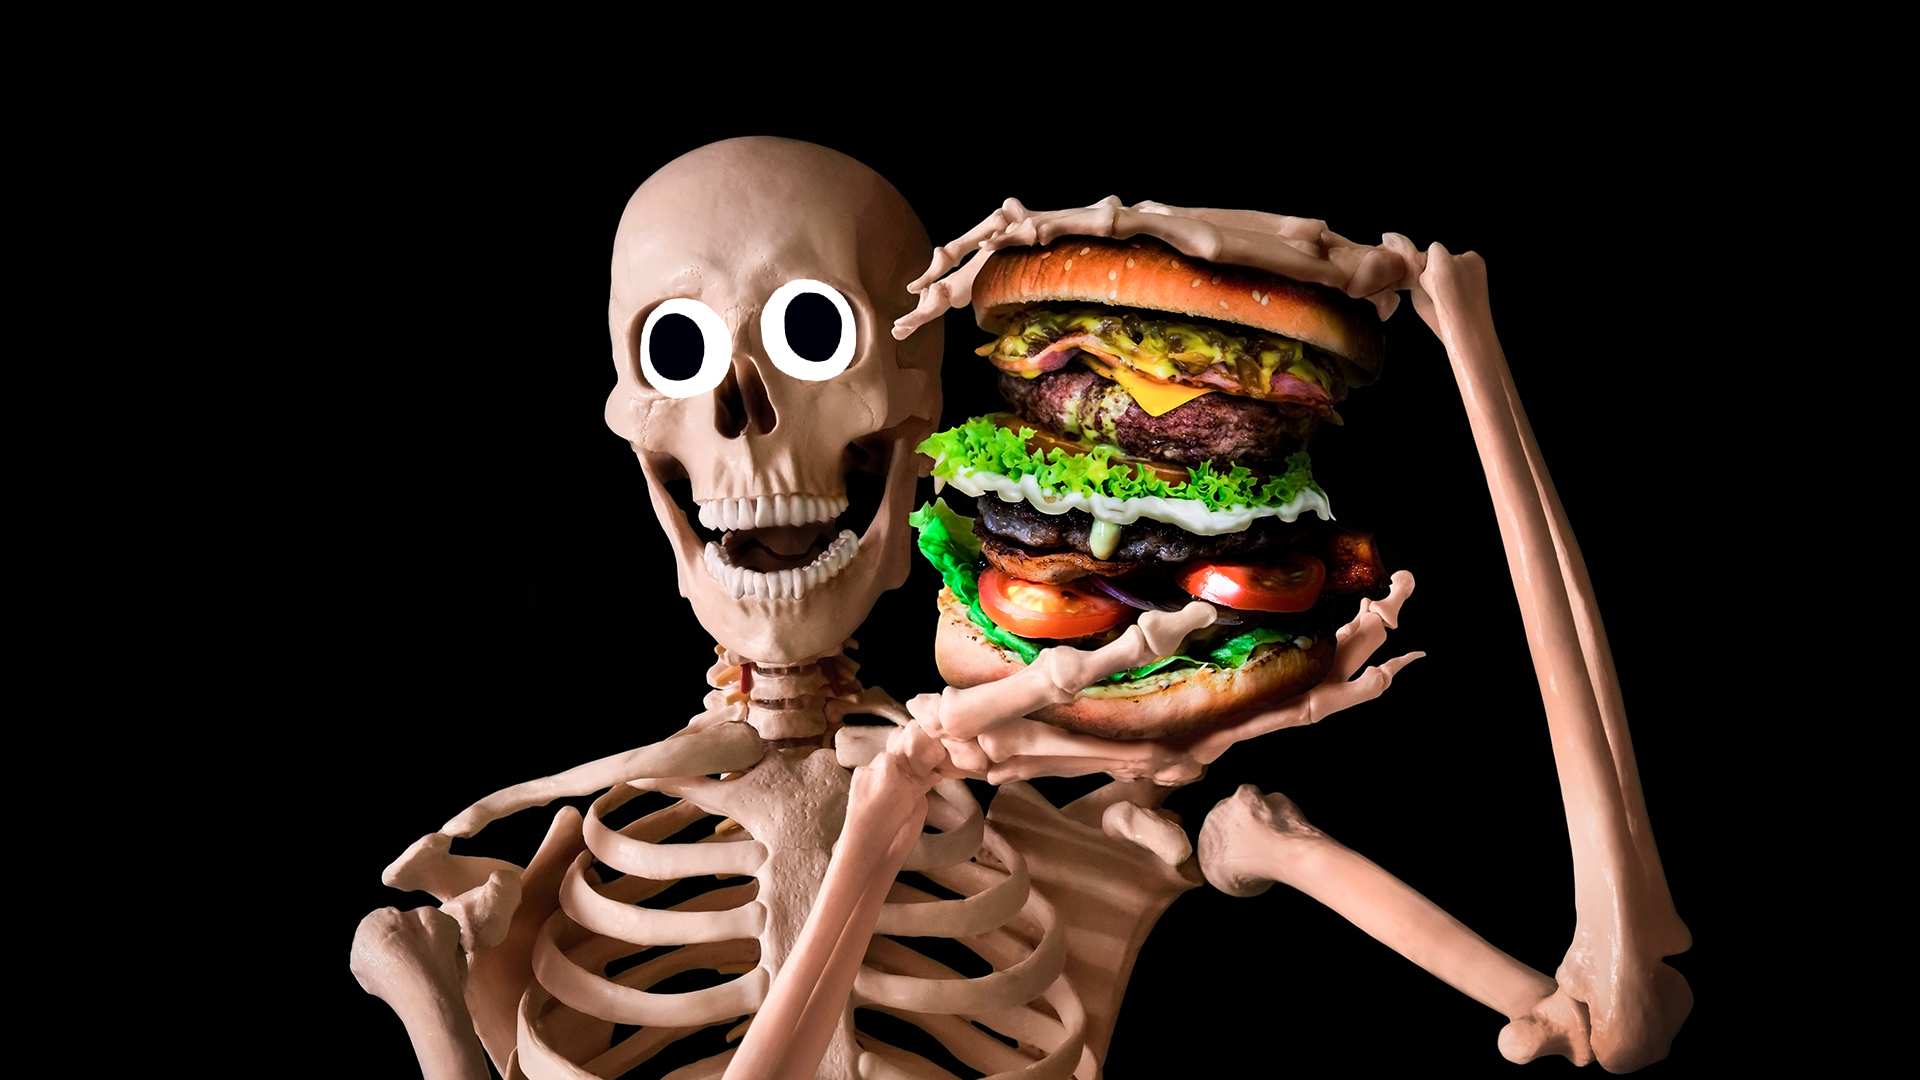 Skeleton tucking in to a huge sandwich